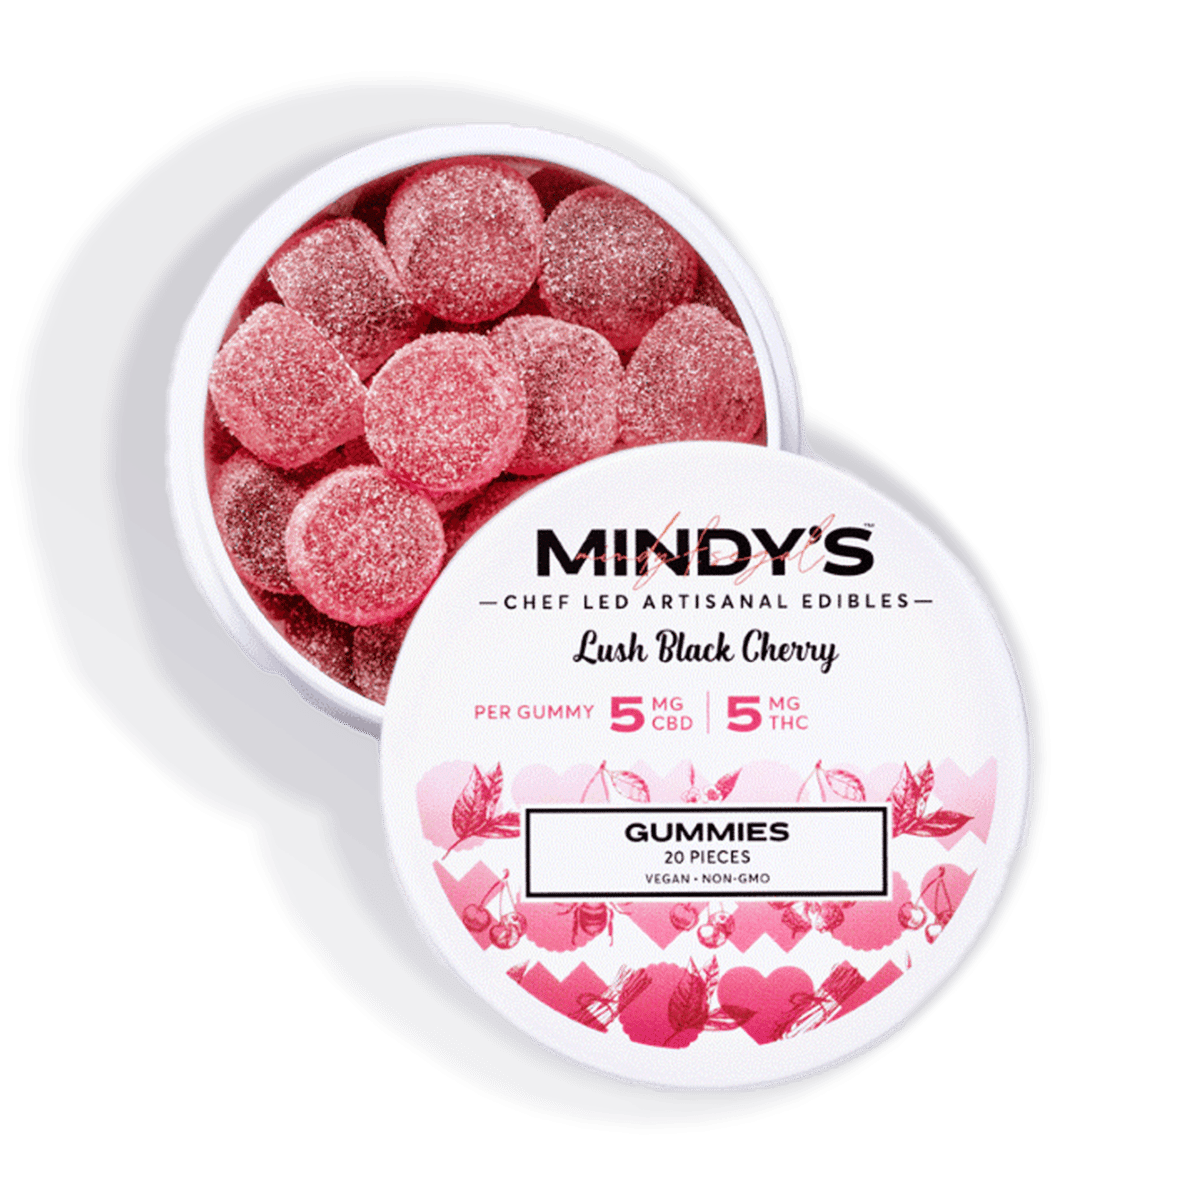 Mindy’s Edibles Lush Black Cherry 1-1 Chews